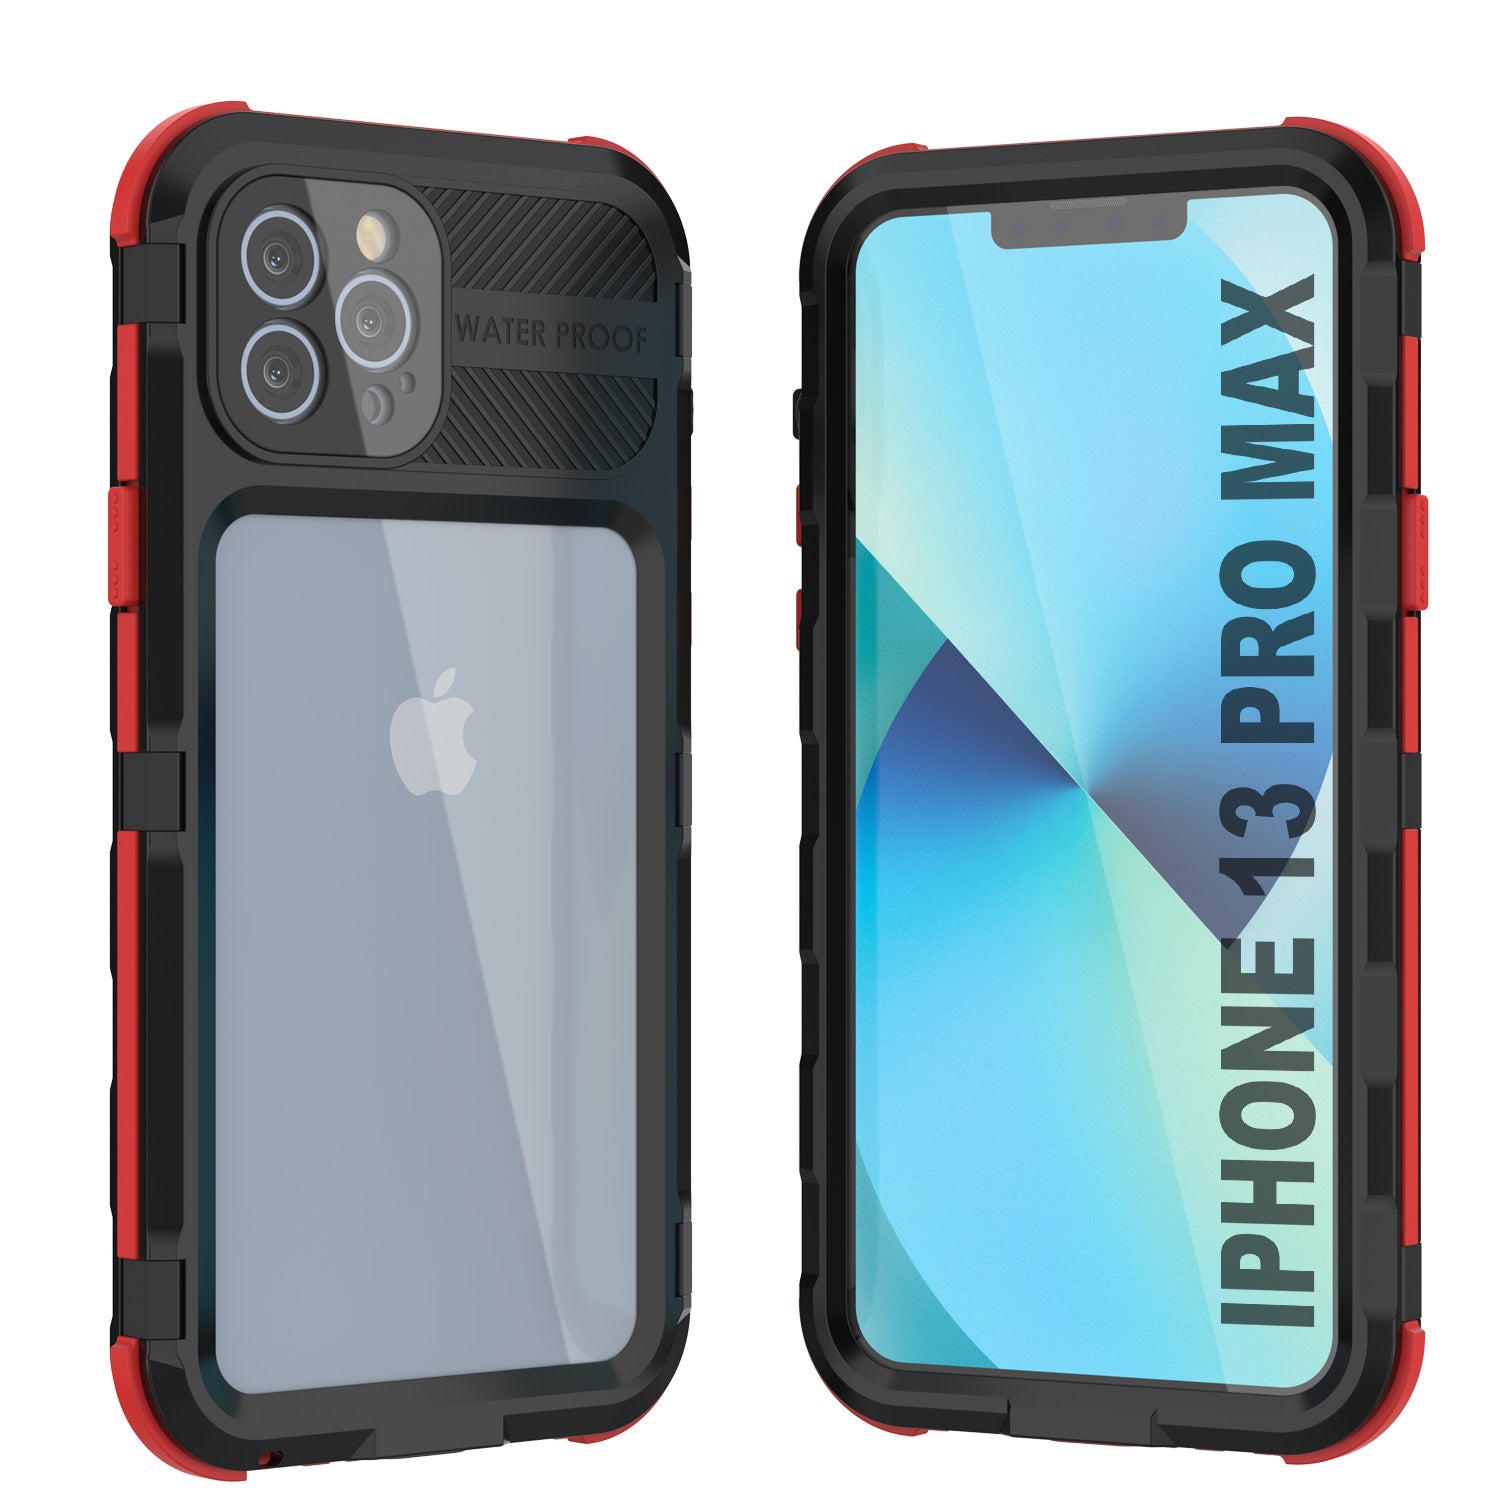 iPhone 13 Pro Max Battery Case, PunkJuice 4800mAH Fast Charging Power –  punkcase